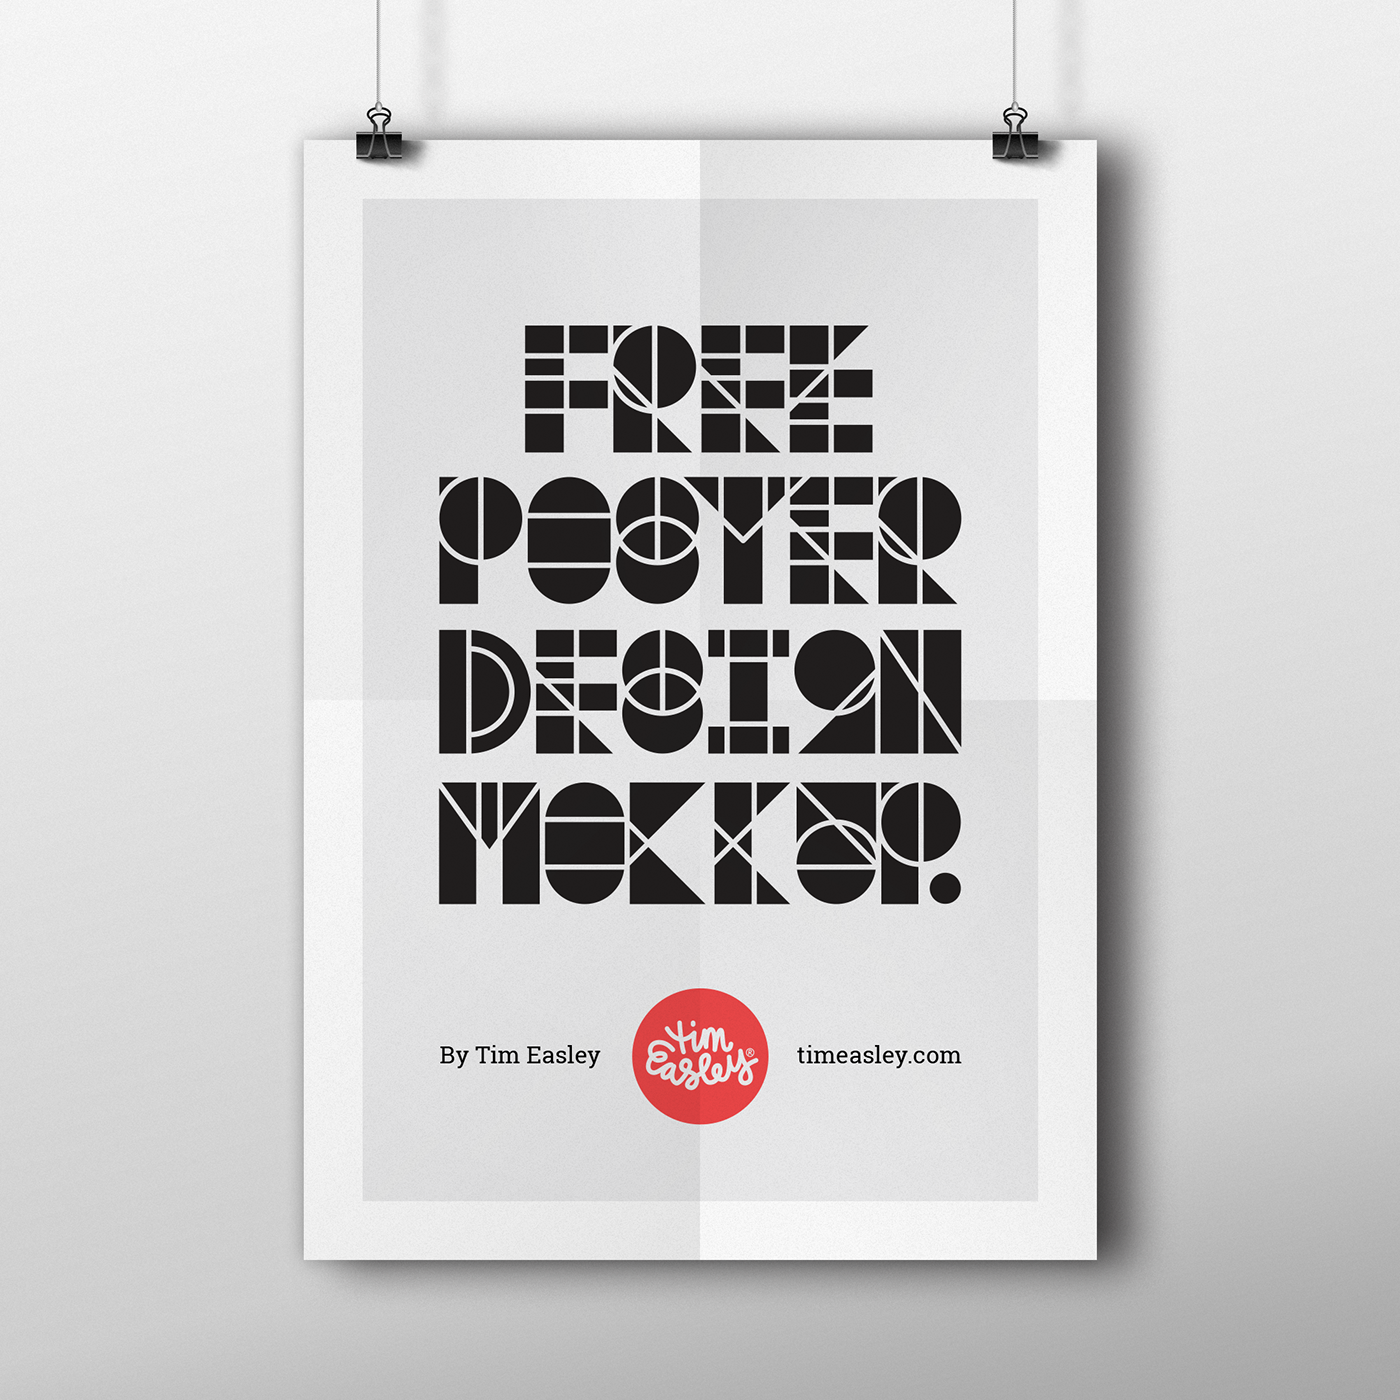 Free Clean Poster Design Mockup